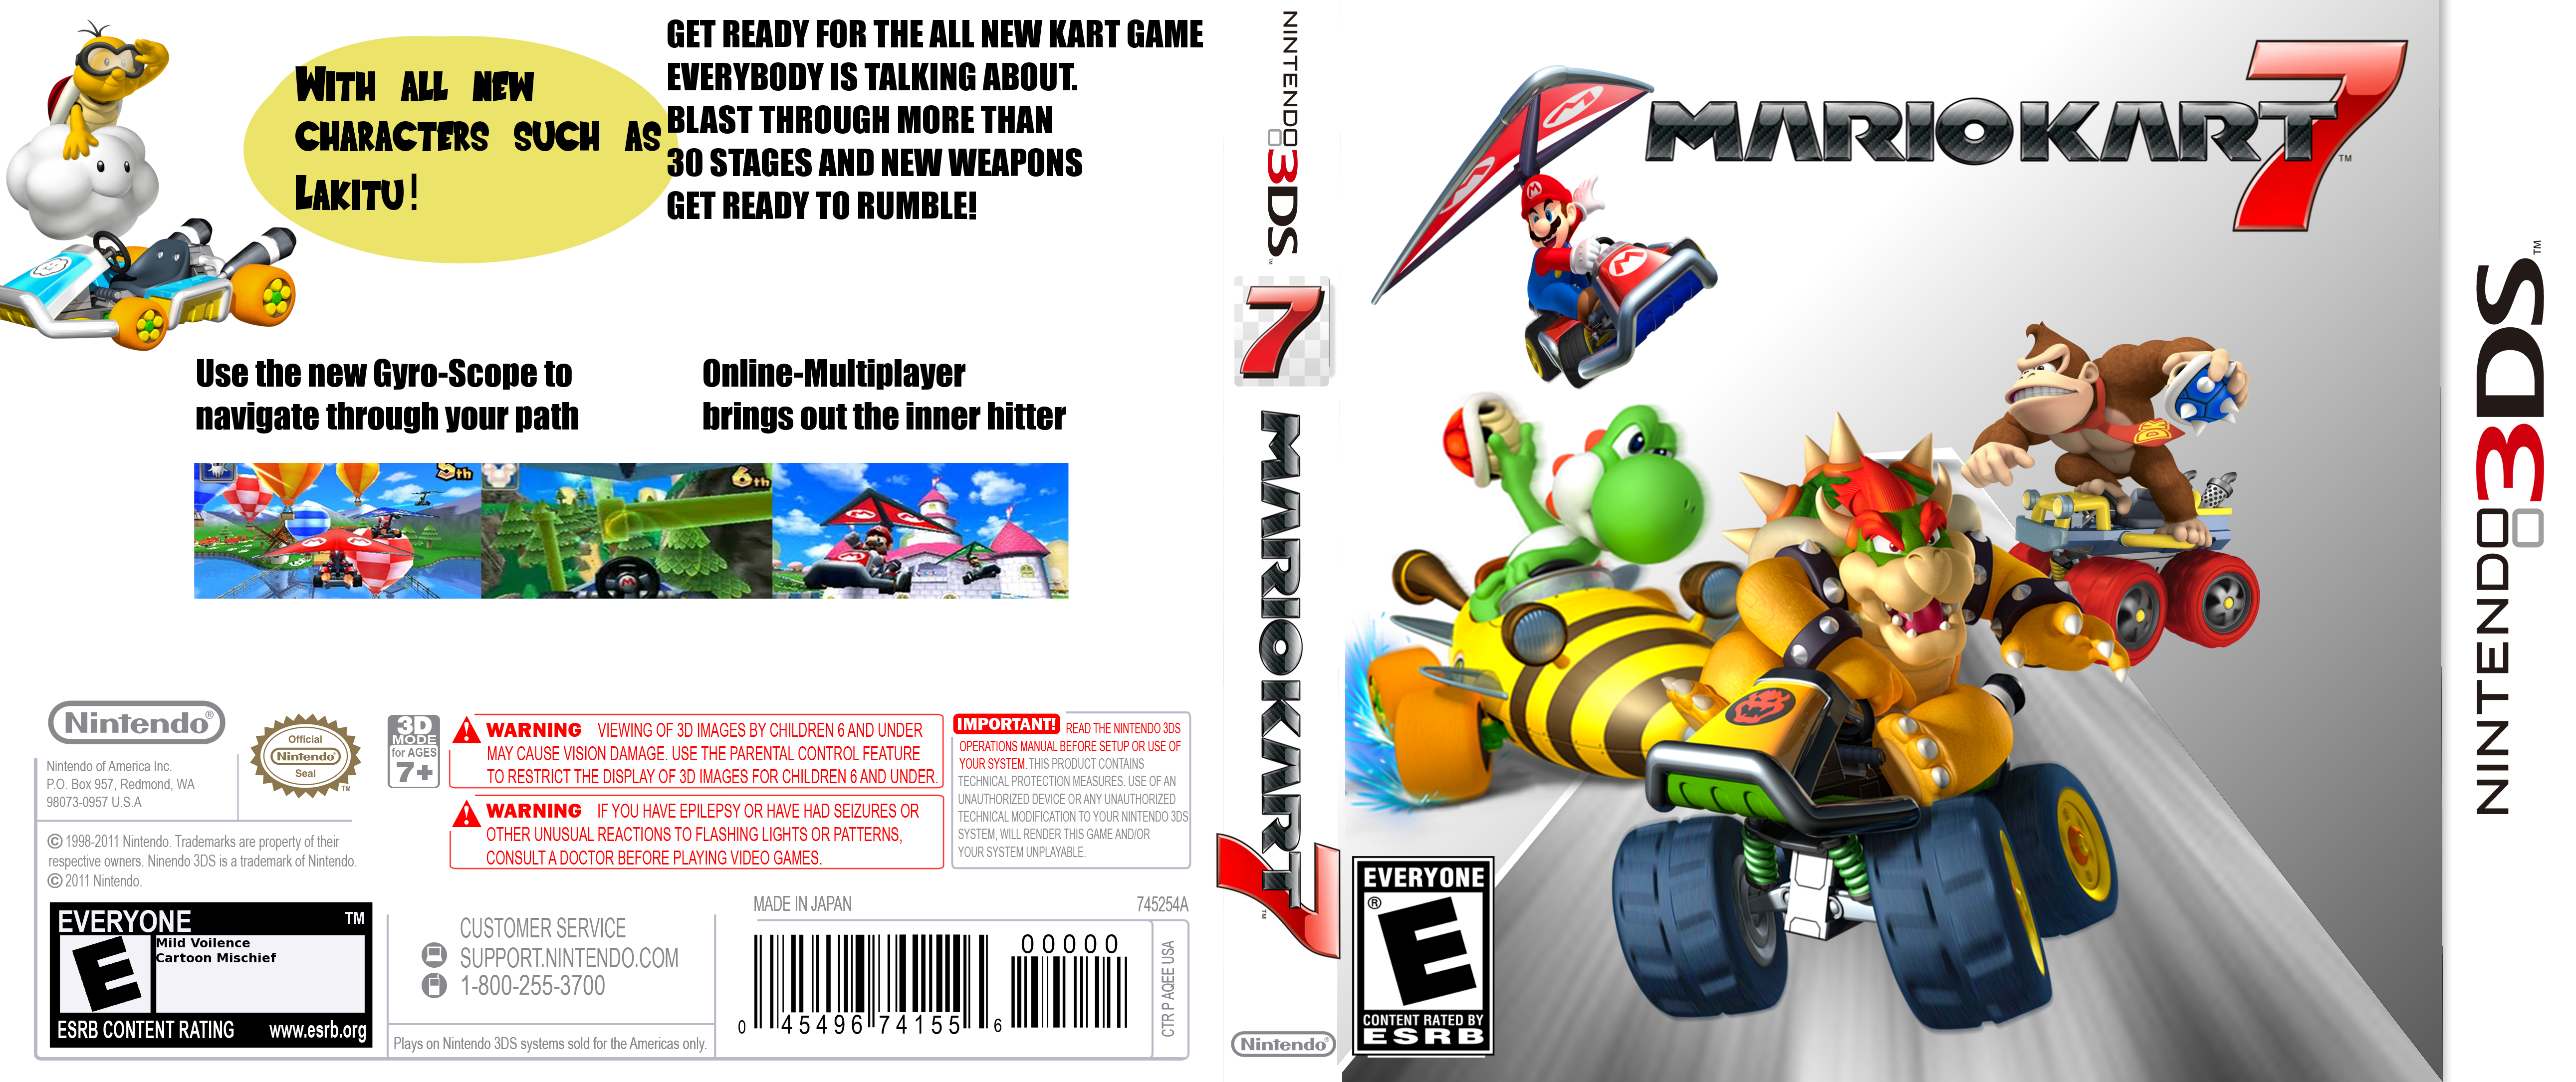 Mario Kart 7 box cover